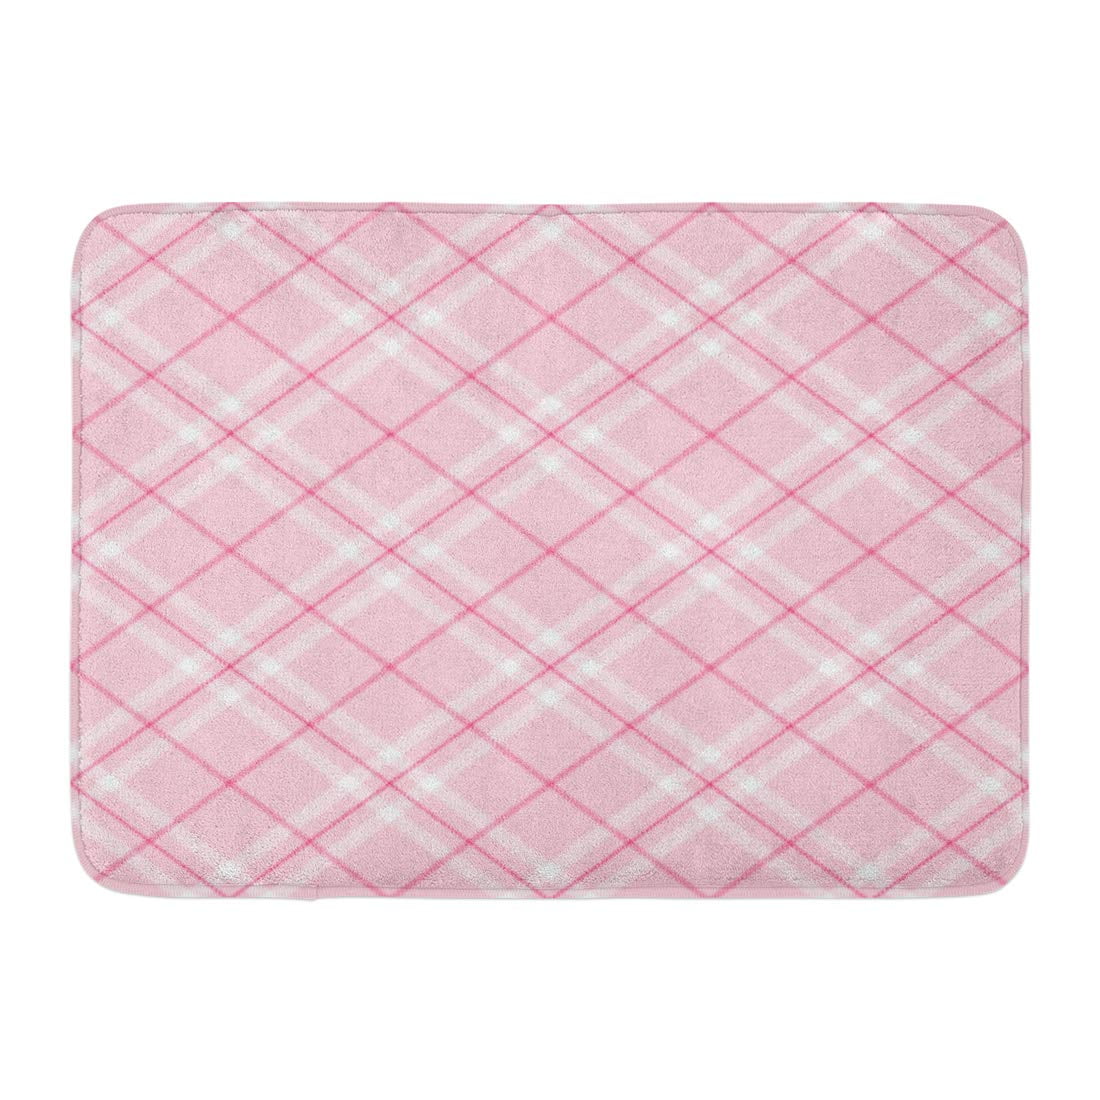 GODPOK Checkered Tartan Light Pink Plaid Pastel Line Rug Doormat Bath ...